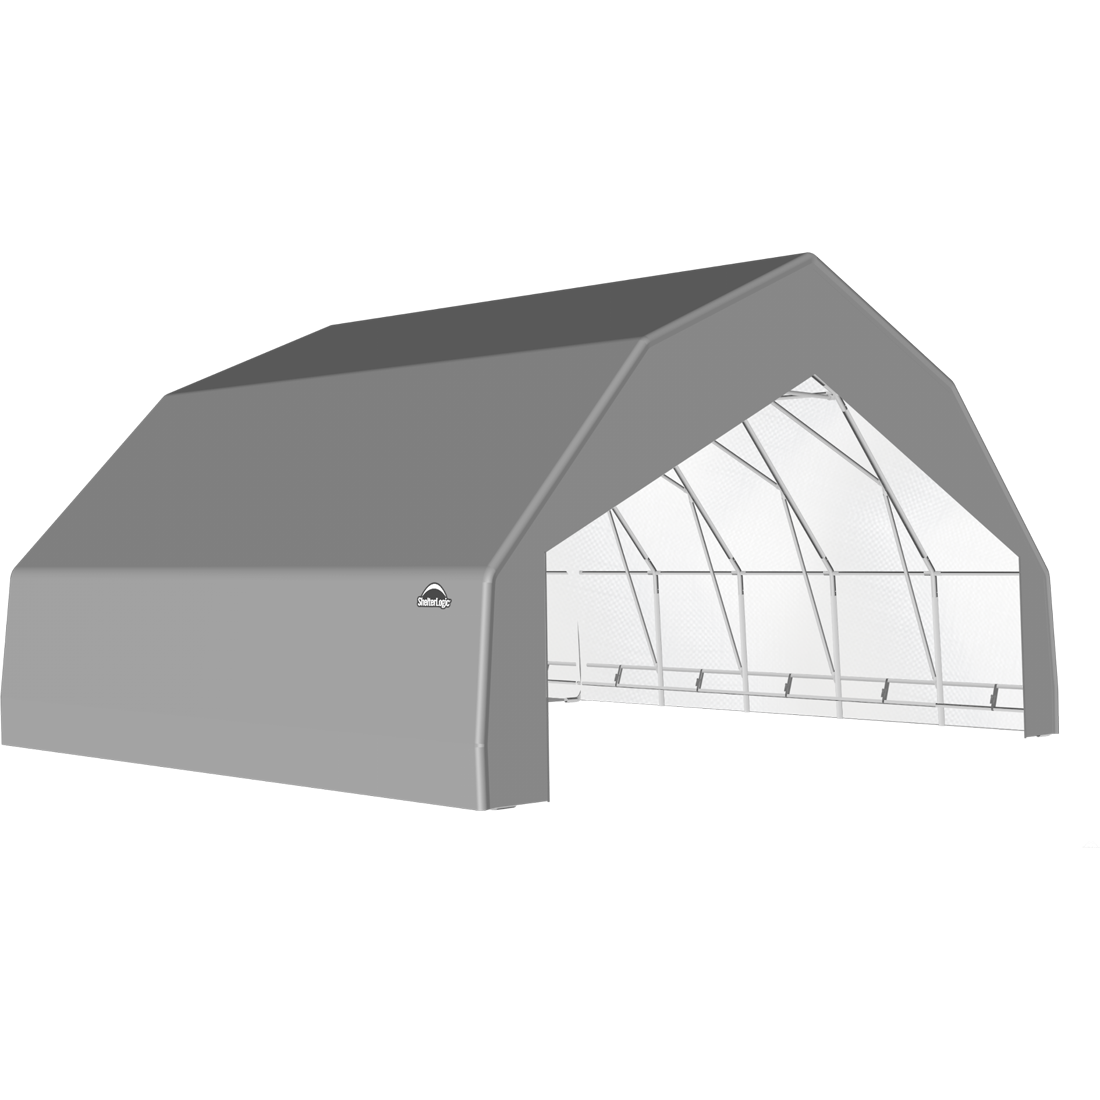 ShelterTech SP Series Barn Shelter, 30 ft. x 24 ft. x 15 ft. Heavy Duty PVC 14.5 oz. Gray